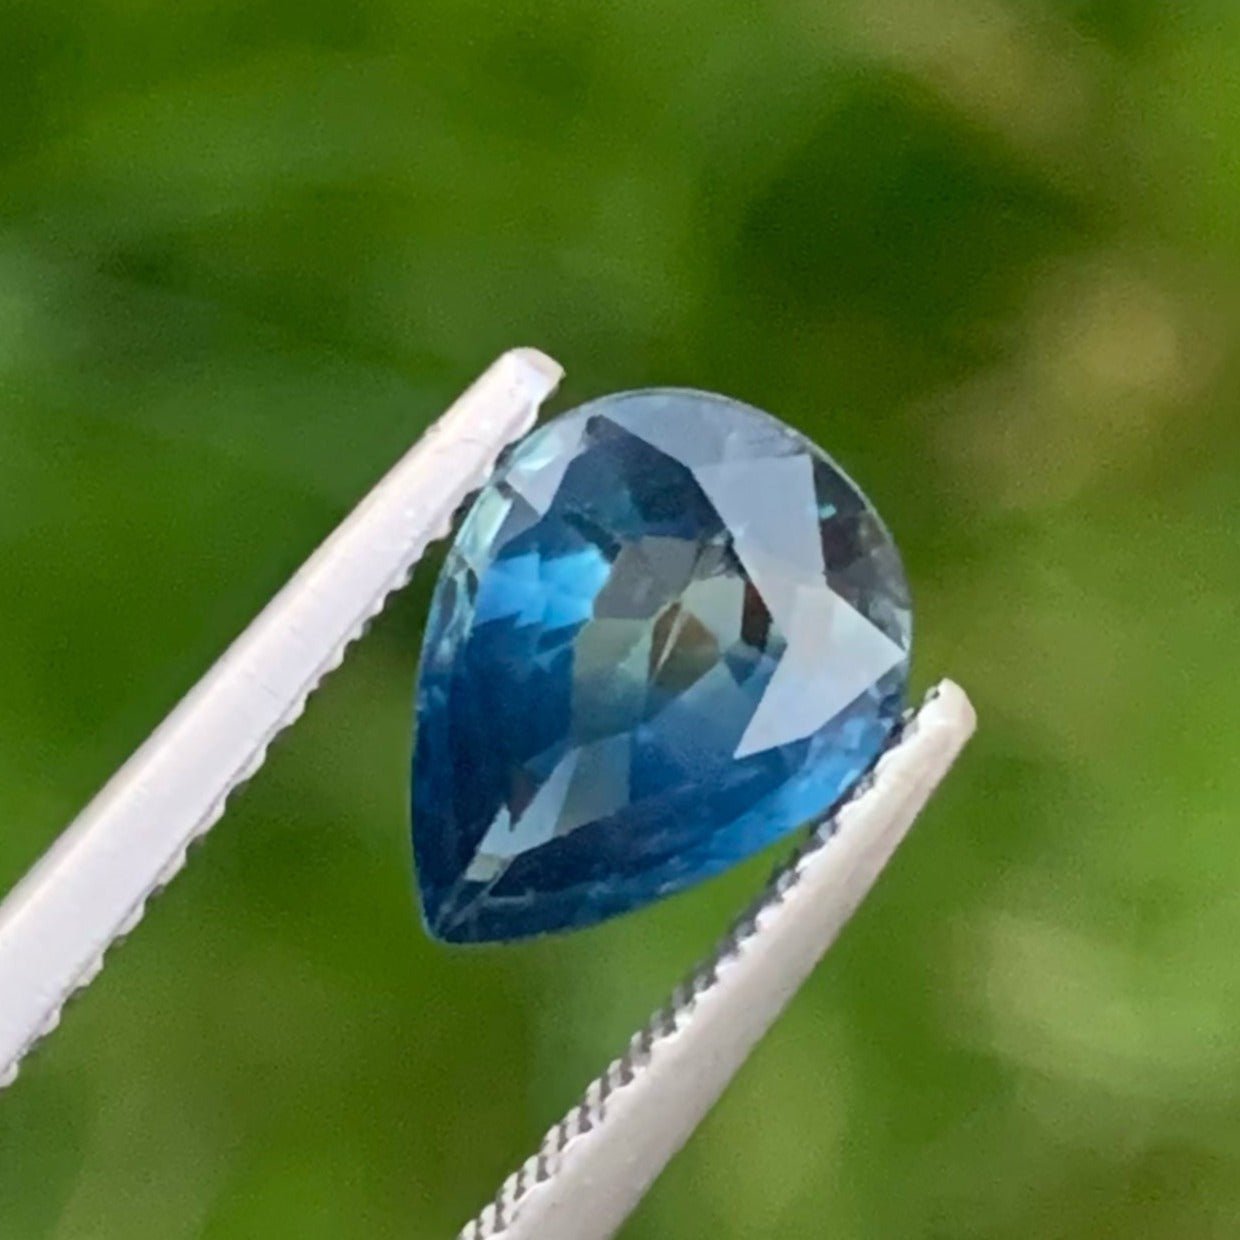 Luxurious Sapphire Gemstone 1.60 carats Pear Cut Loose Stone from Sri Lanka